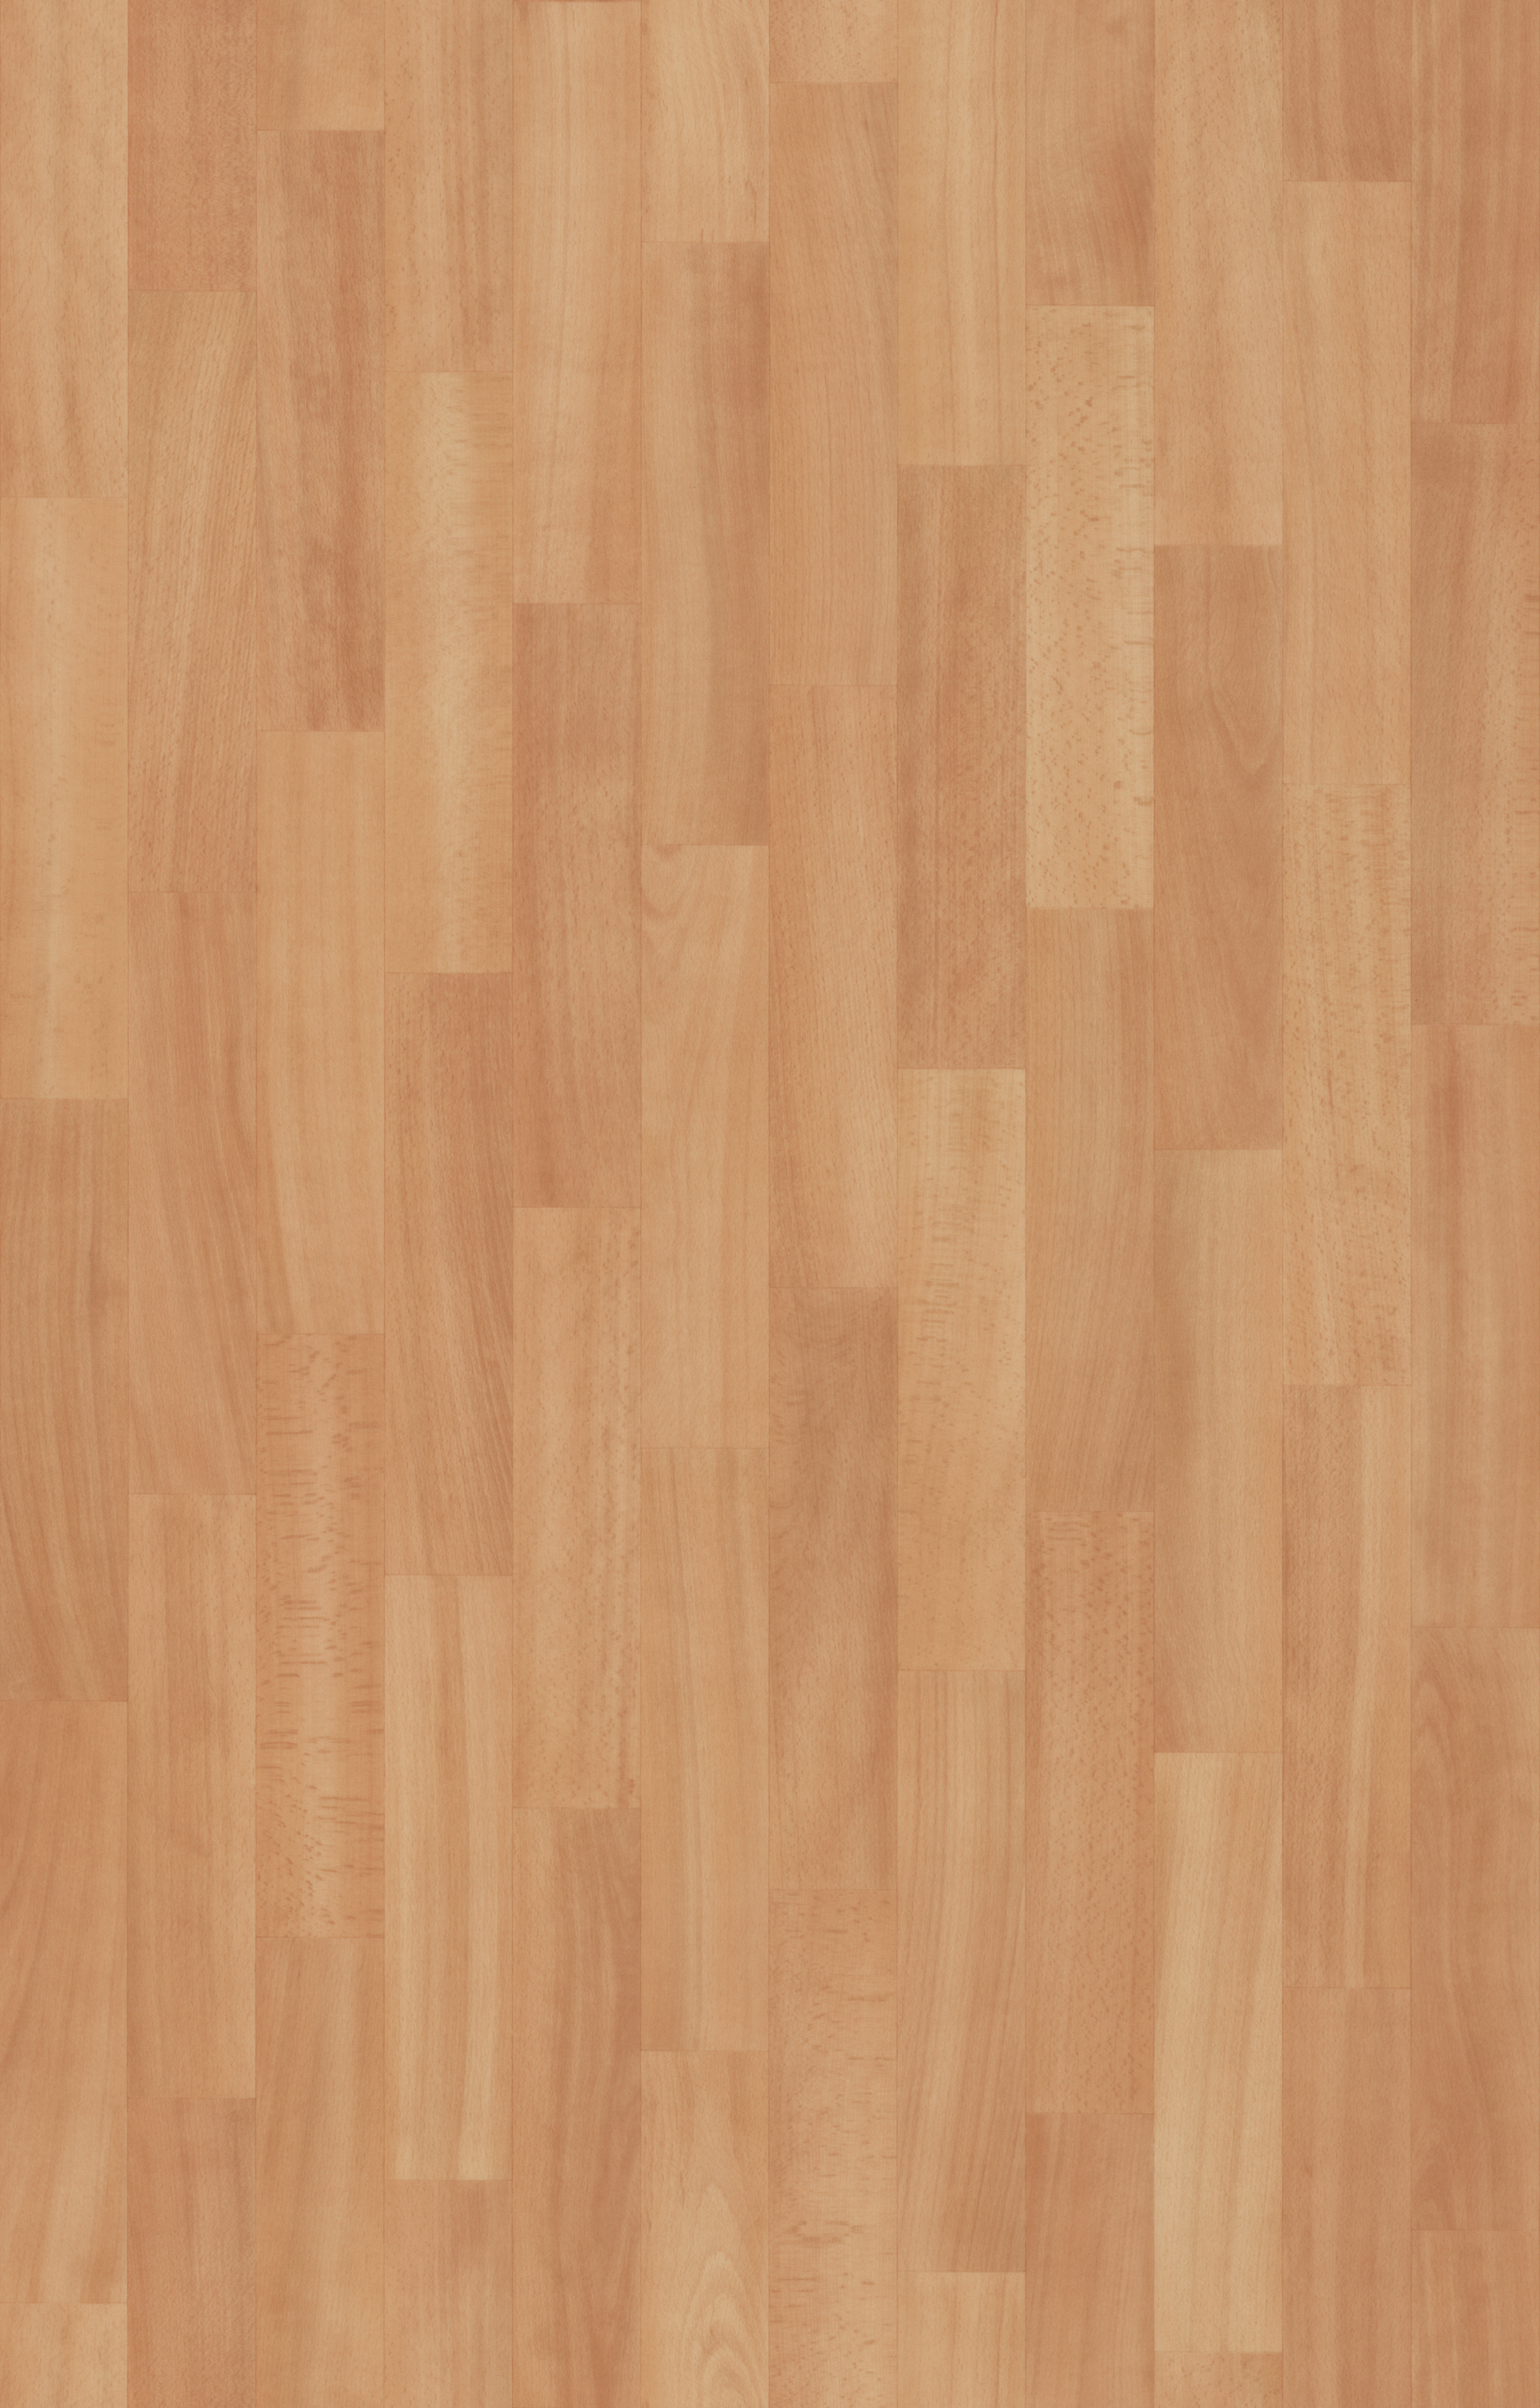 Eternal Wood design vinyl sheet | Forbo Flooring Systems